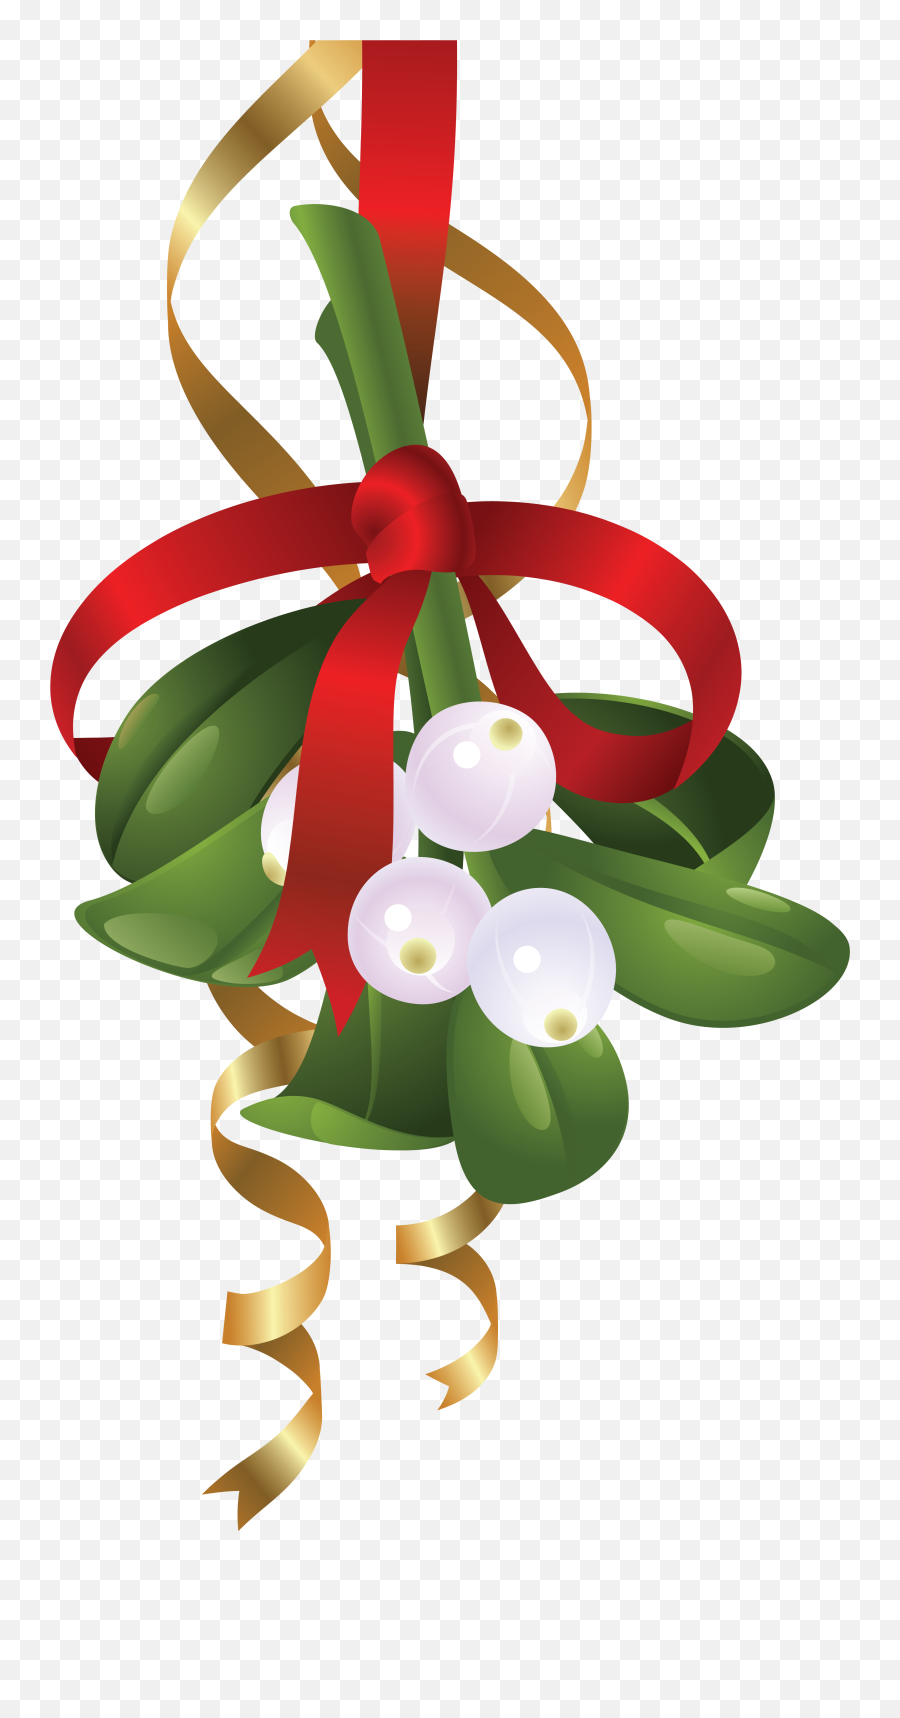 Mistletoe Portable Network Graphics Clip Art Illustration - Free Christmas Mistletoe Clipart Png,Mistle Toe Png